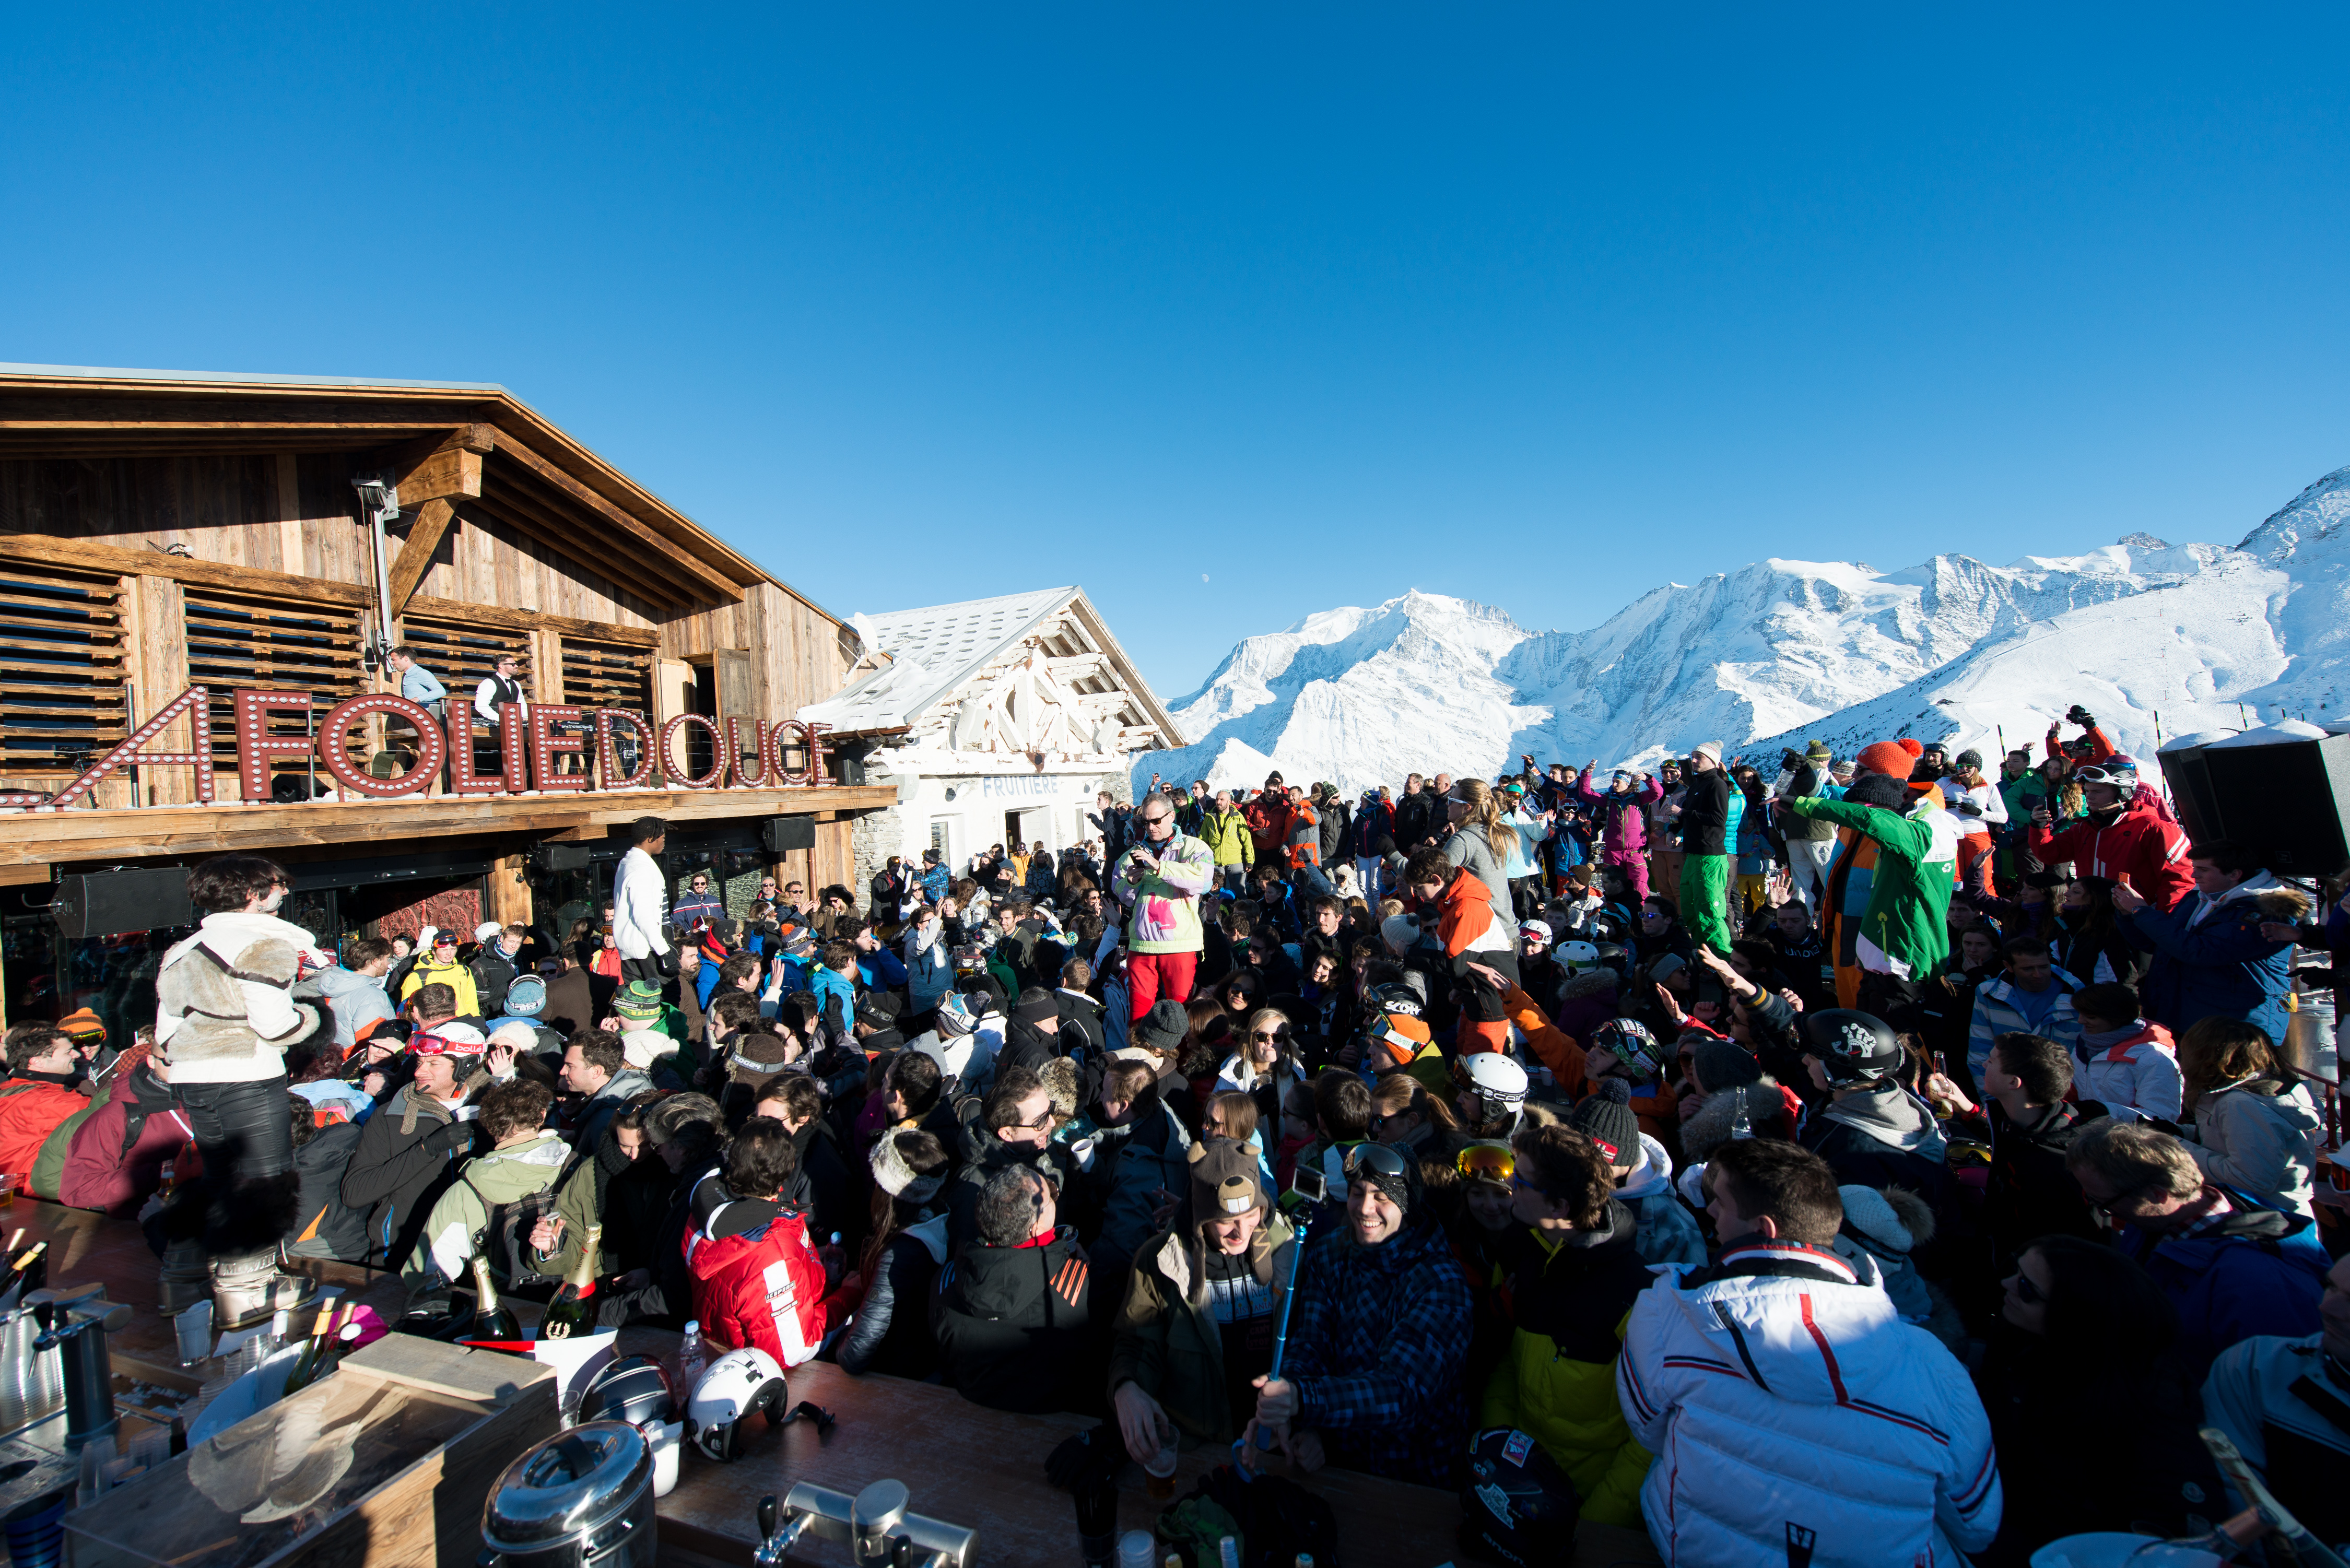 Saint Gervais Ski Resort Guide